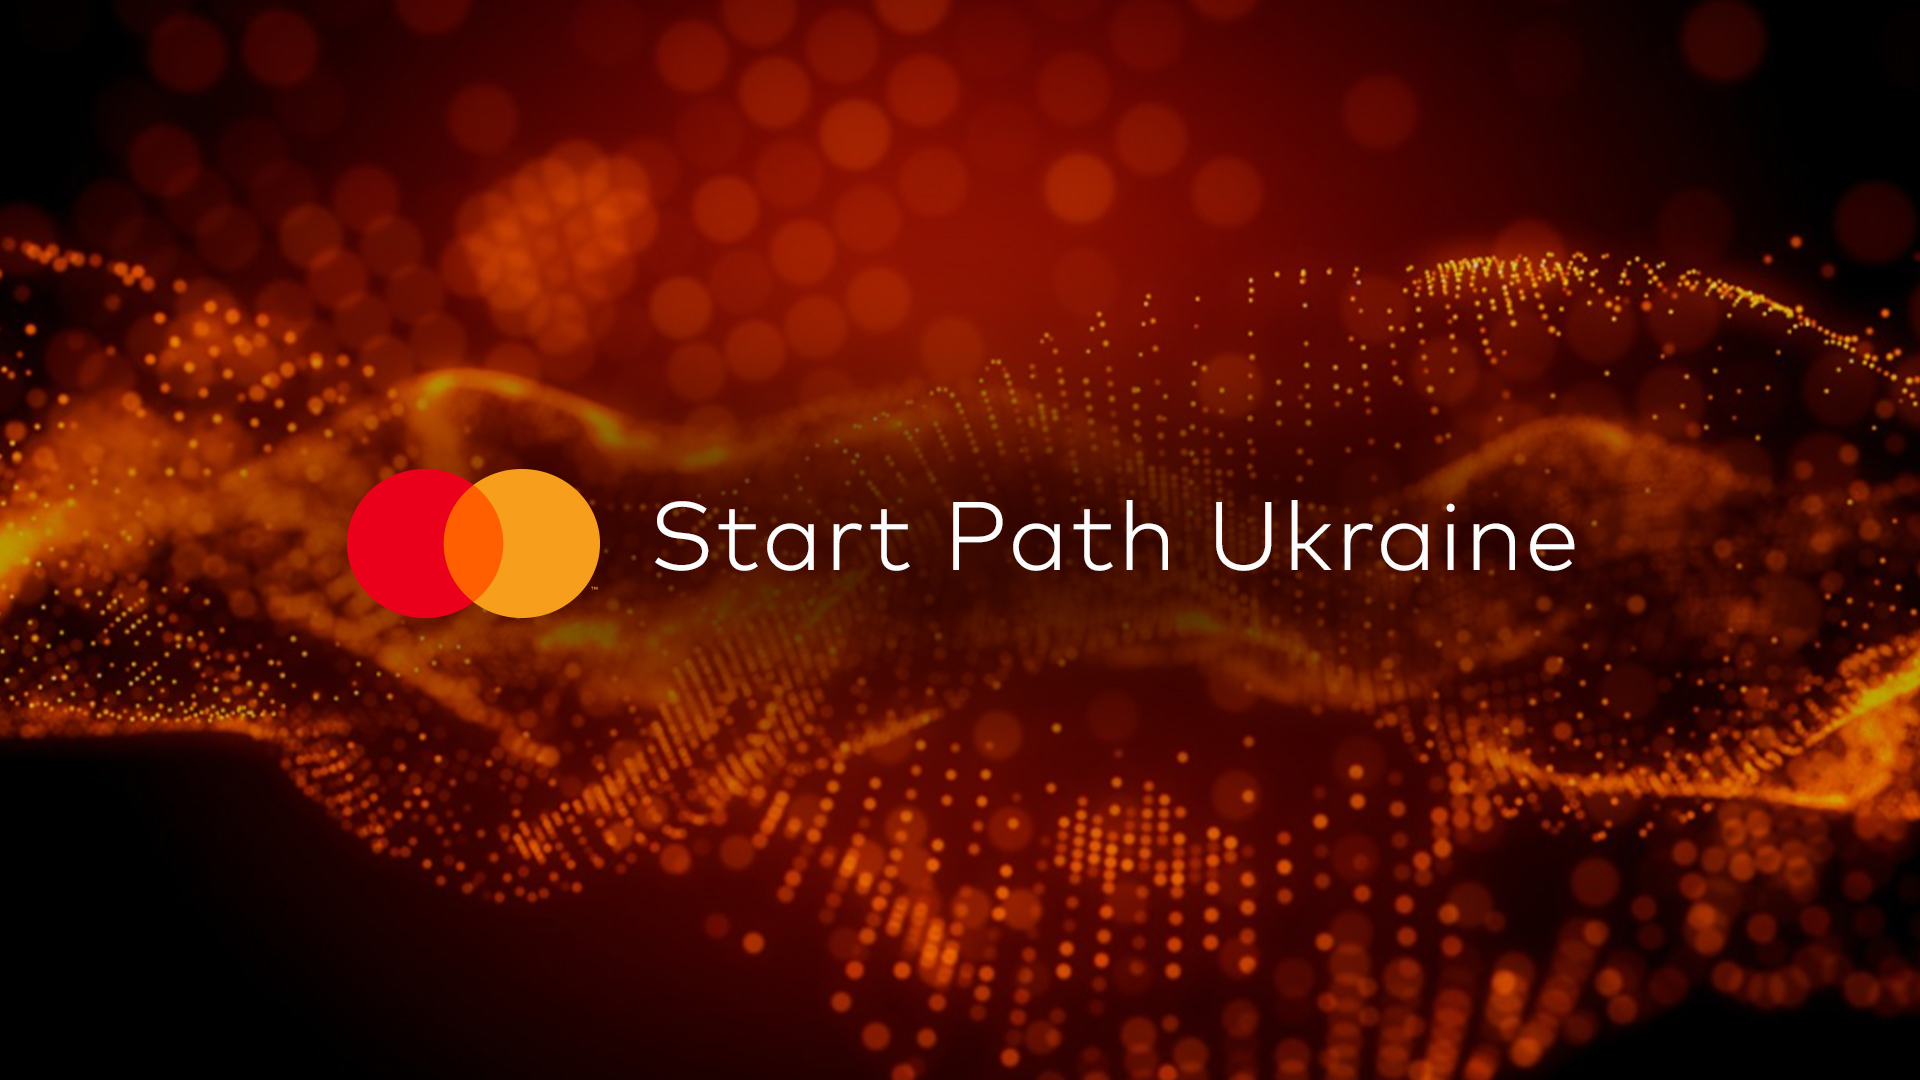 Mastercard opens applications for Start Path Ukraine program and announces $10,000 grants for selected startups - startups-en, press-releases, news-en, it-in-ukraine